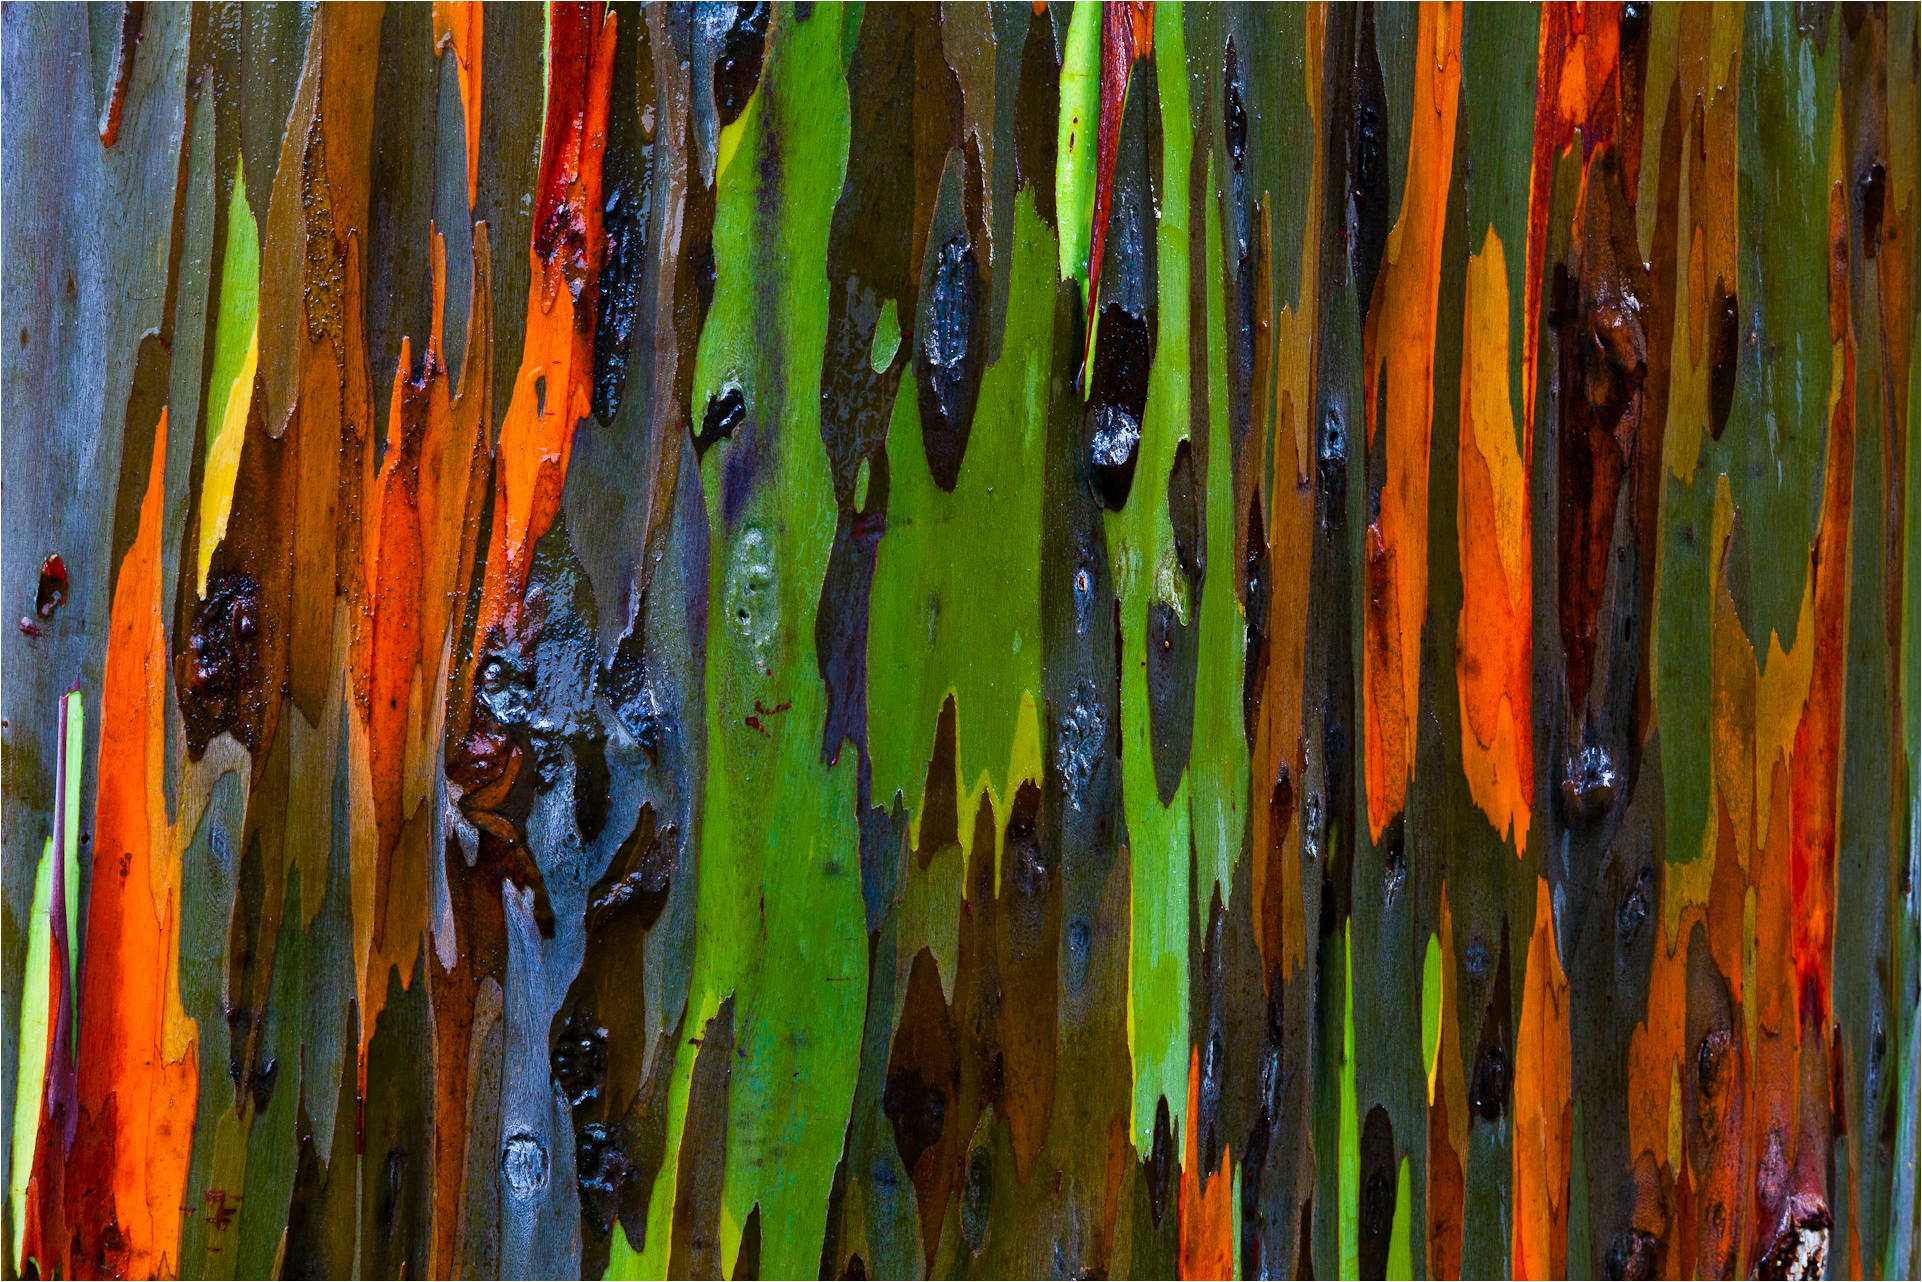 The Rainbow Eucalyptus Tree: A Natural Work of Art 